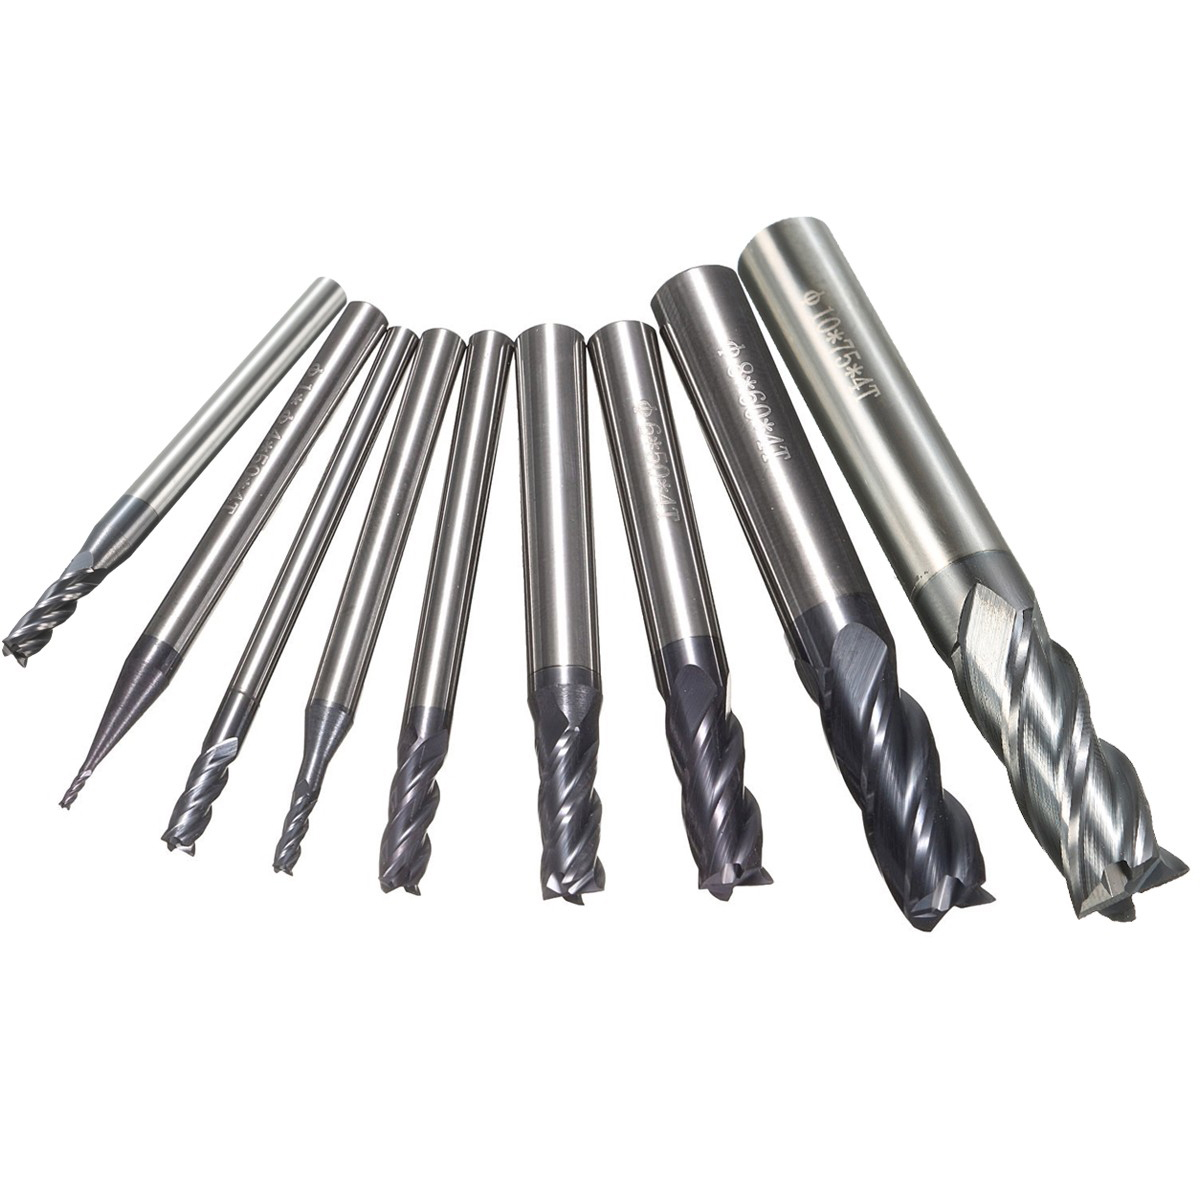 

Drillpro 9pcs 1-10mm 4 Flutes Tungsten Carbide Milling Cutter HRC50 Milling Cutter CNC Tool